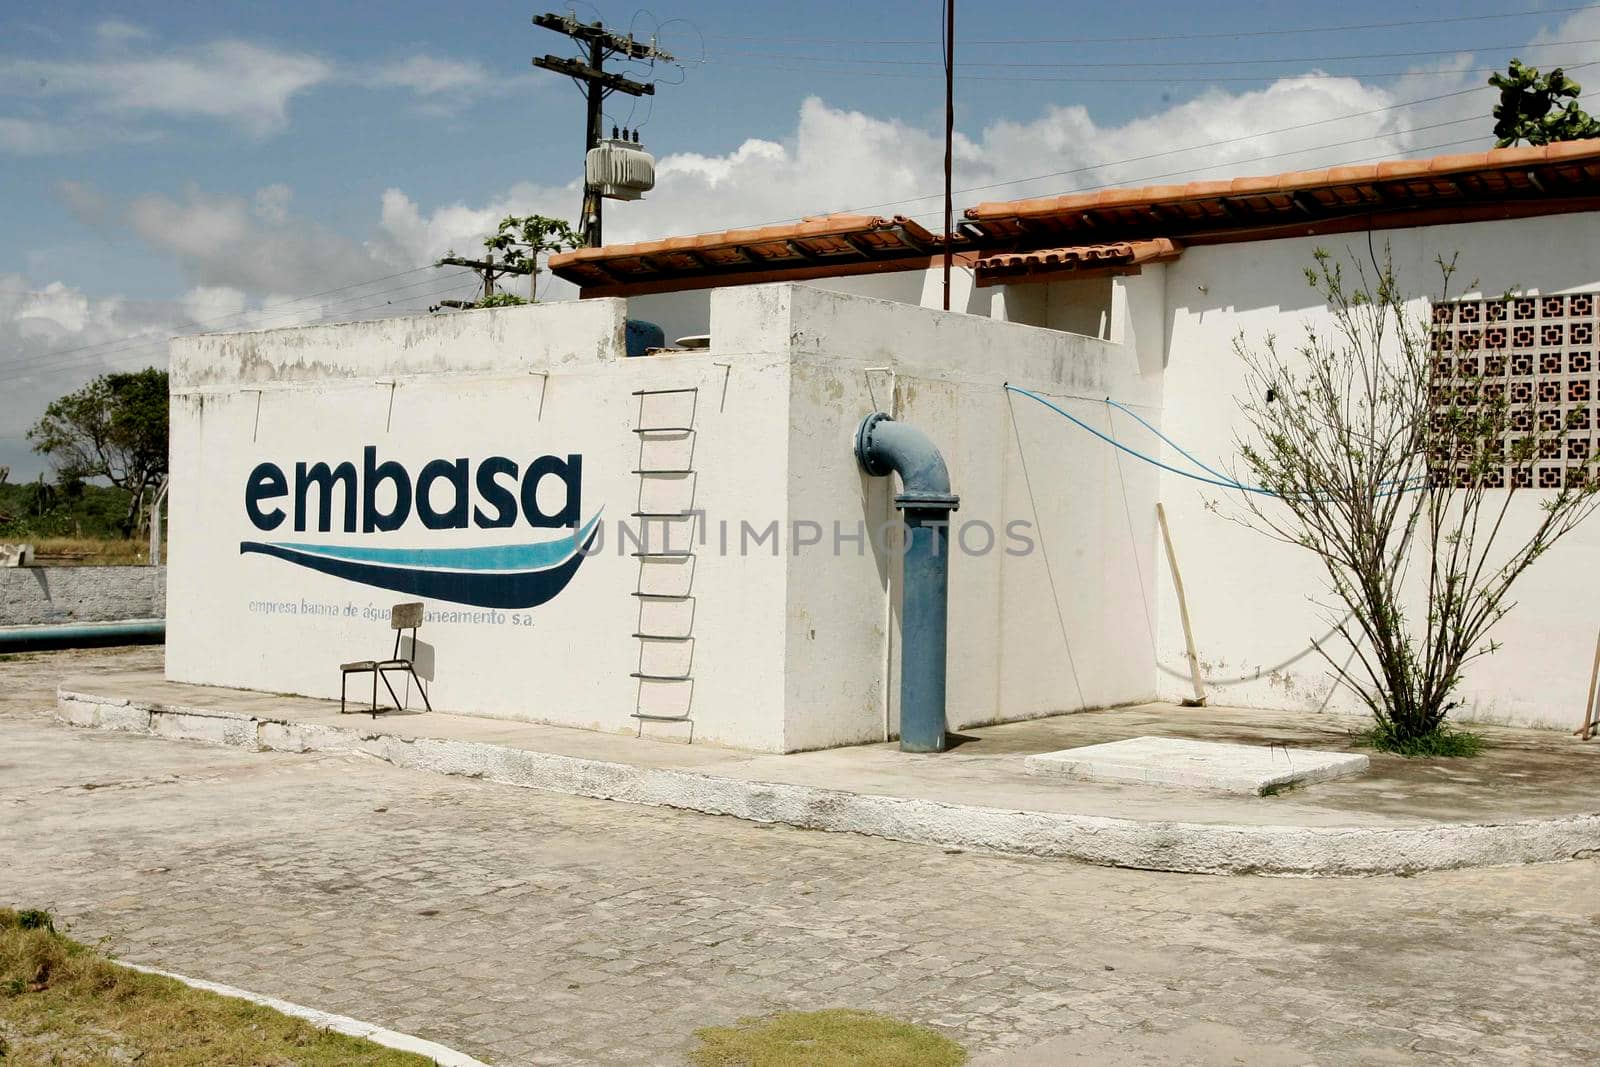 nova vicosa, bahia / brazil - september 23, 2009: facade of Embasa's office in the city of Nova Vicosa, in the south of Bahia.